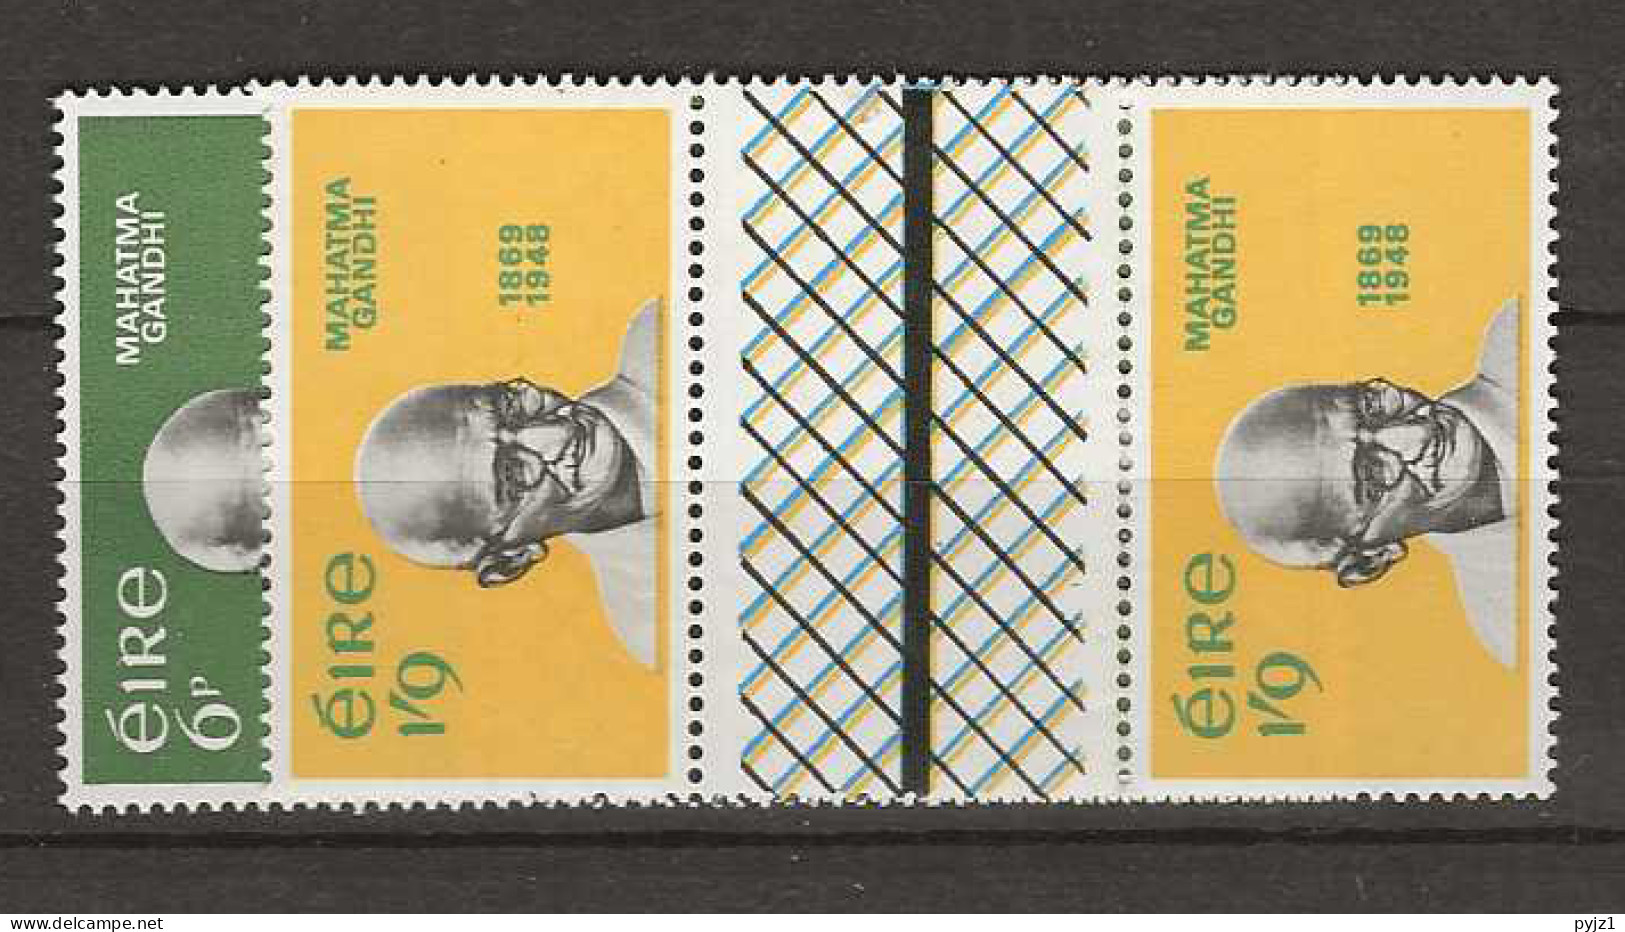 1969 MNH Ireland Mi 235-36 Gutter Pairs Folded - Unused Stamps